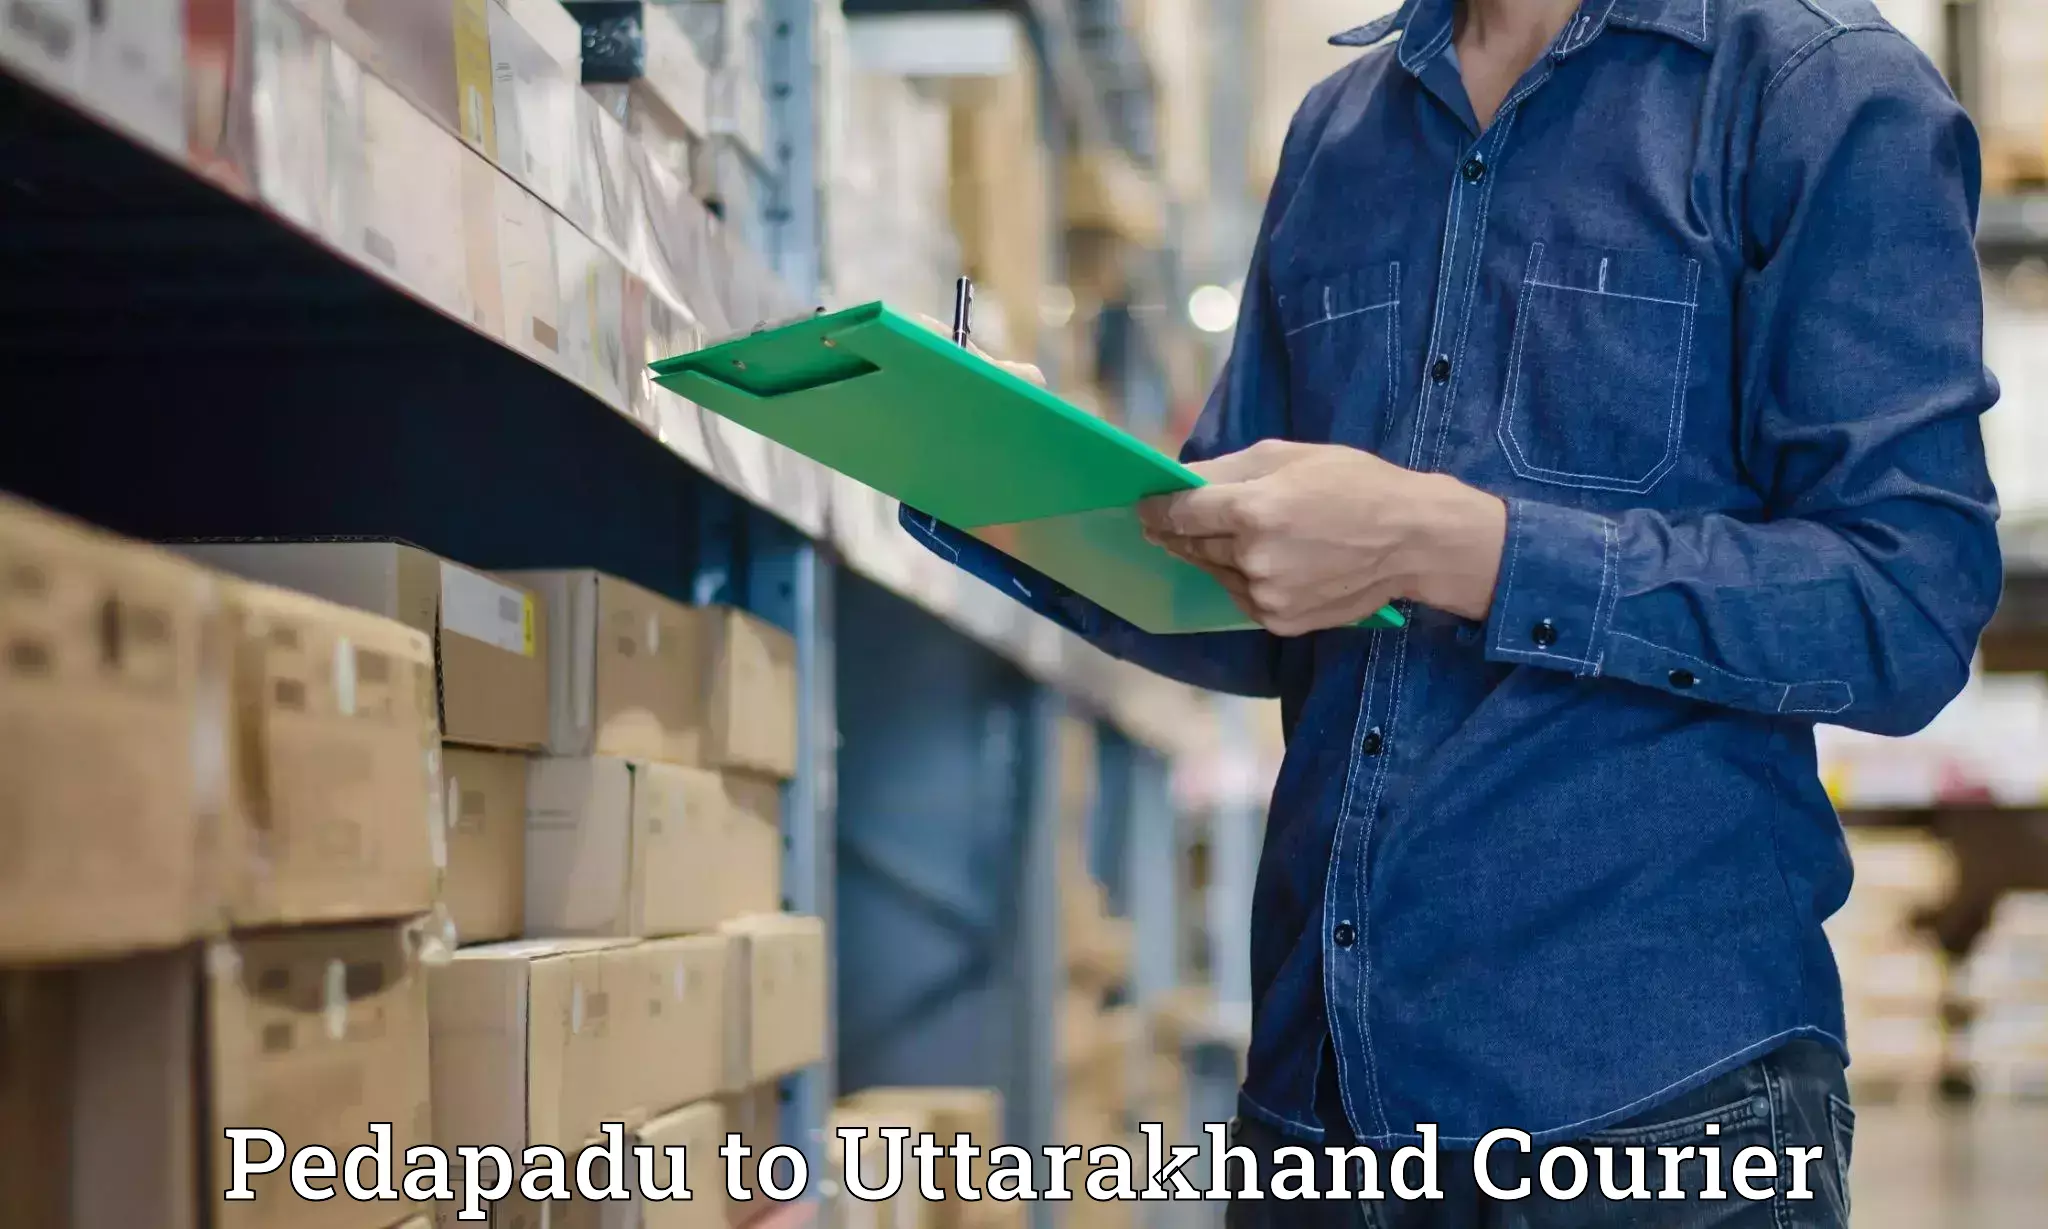 Smart shipping technology Pedapadu to Kashipur